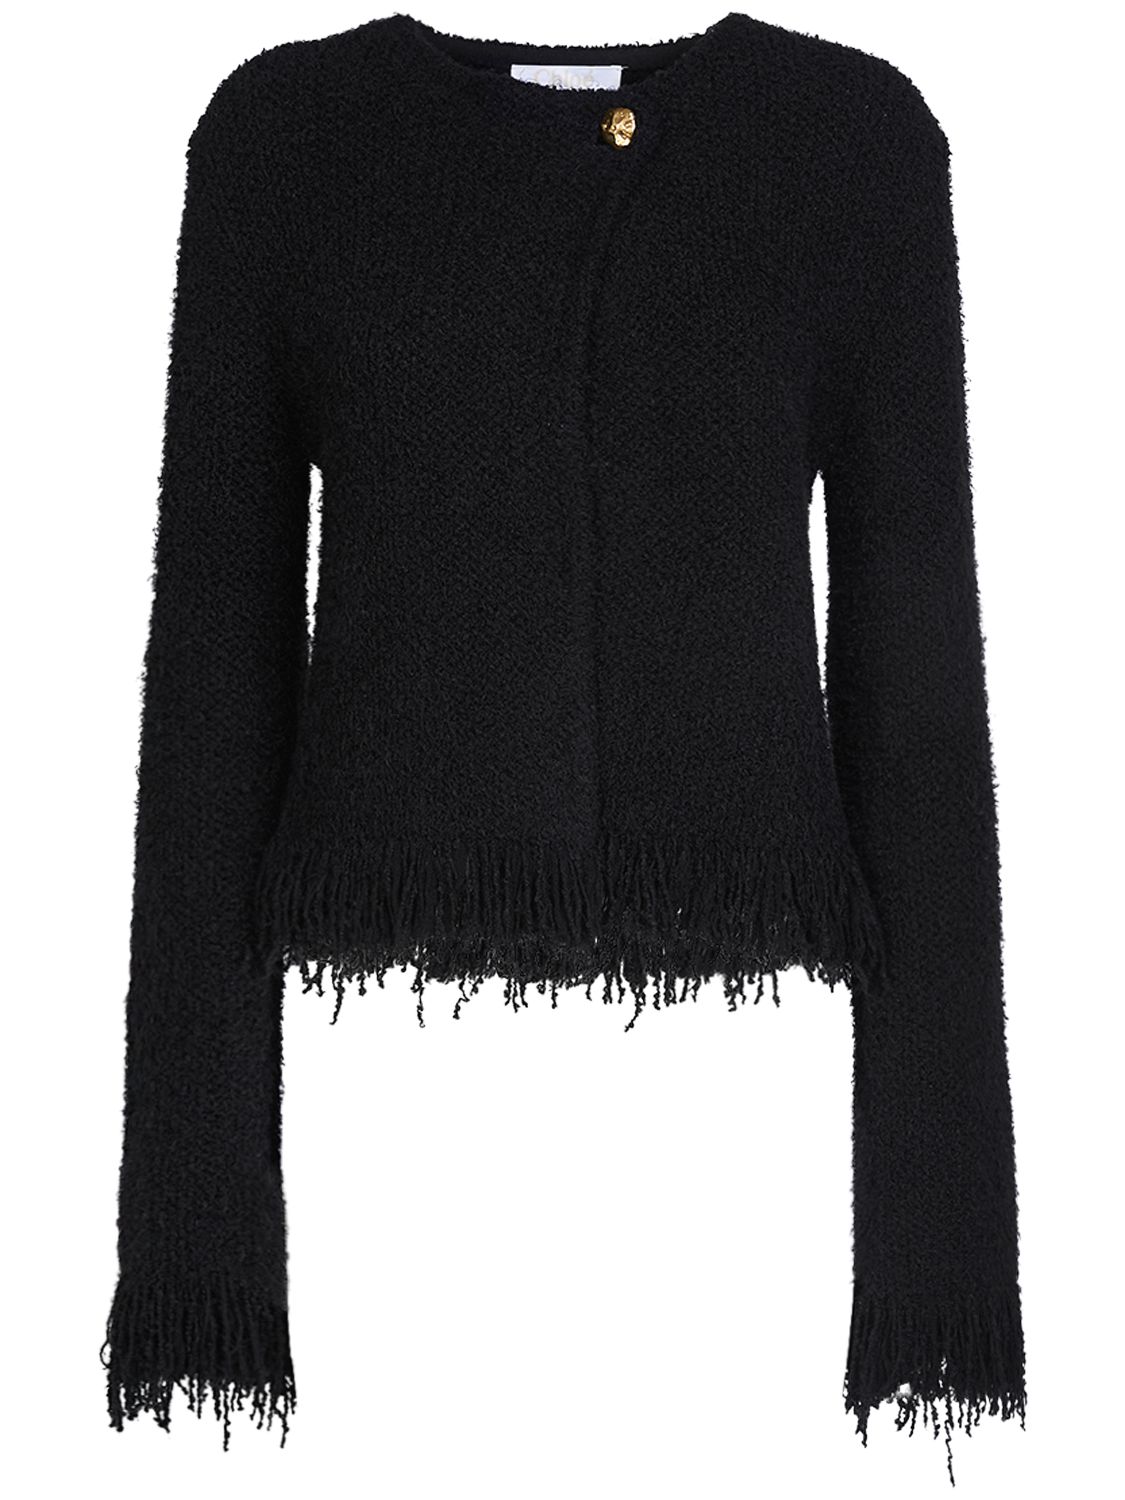 CHLOÉ Embellished Wool & Silk Knit Jacket